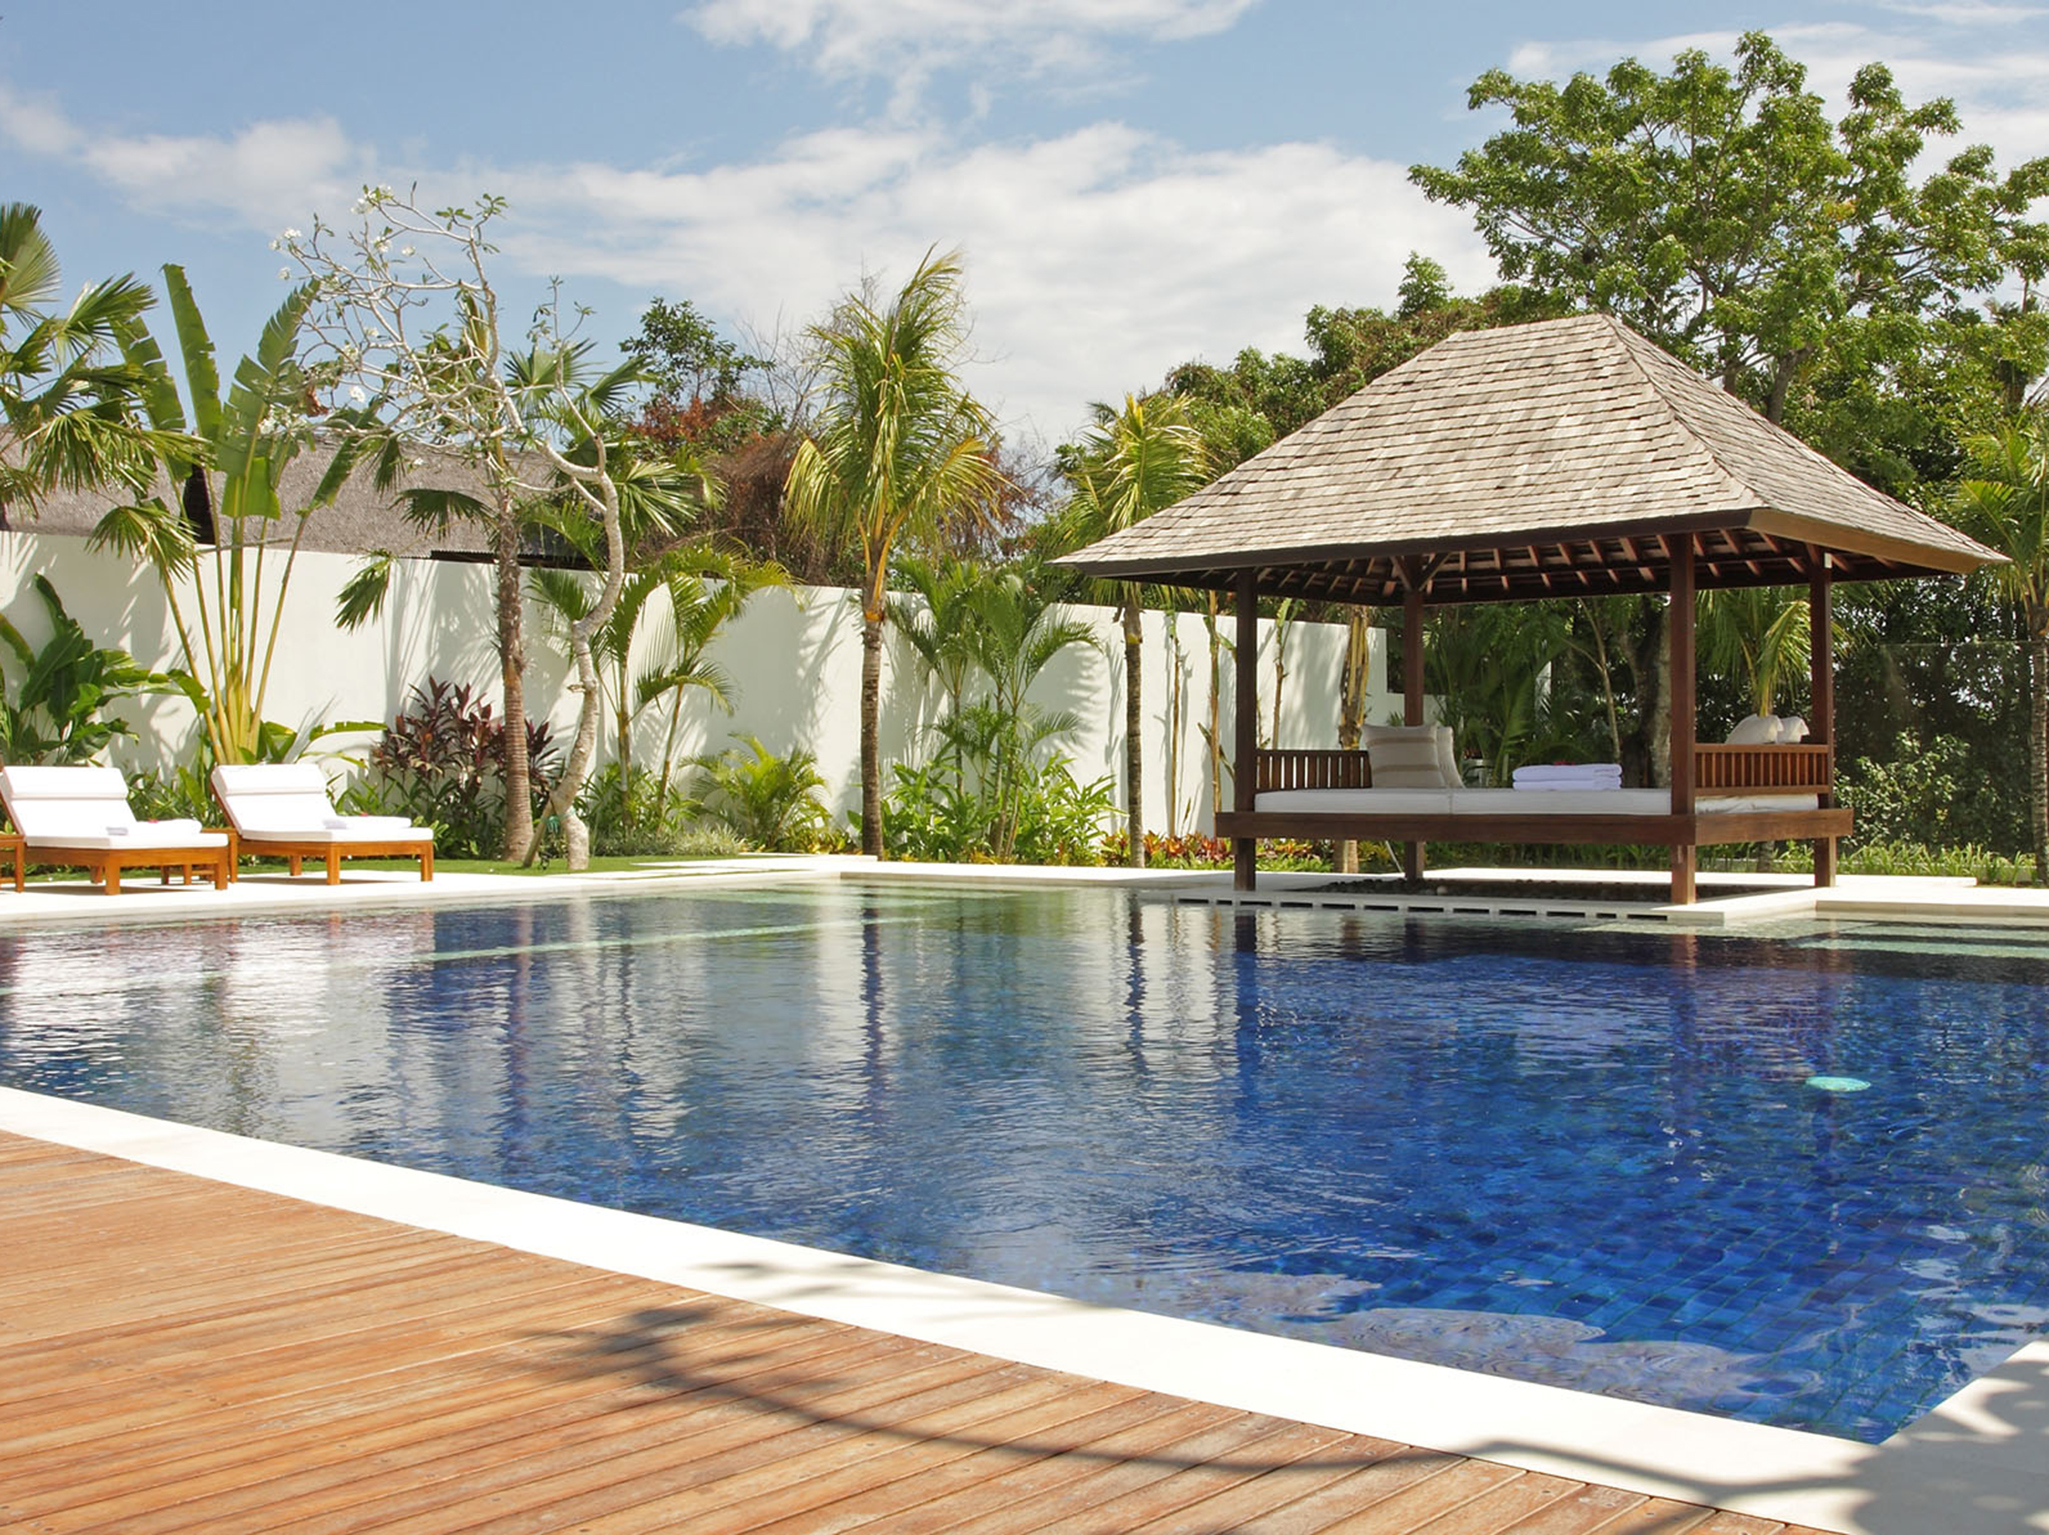 Villa Asante - Pool and bale - Villa Asante, Canggu, Bali